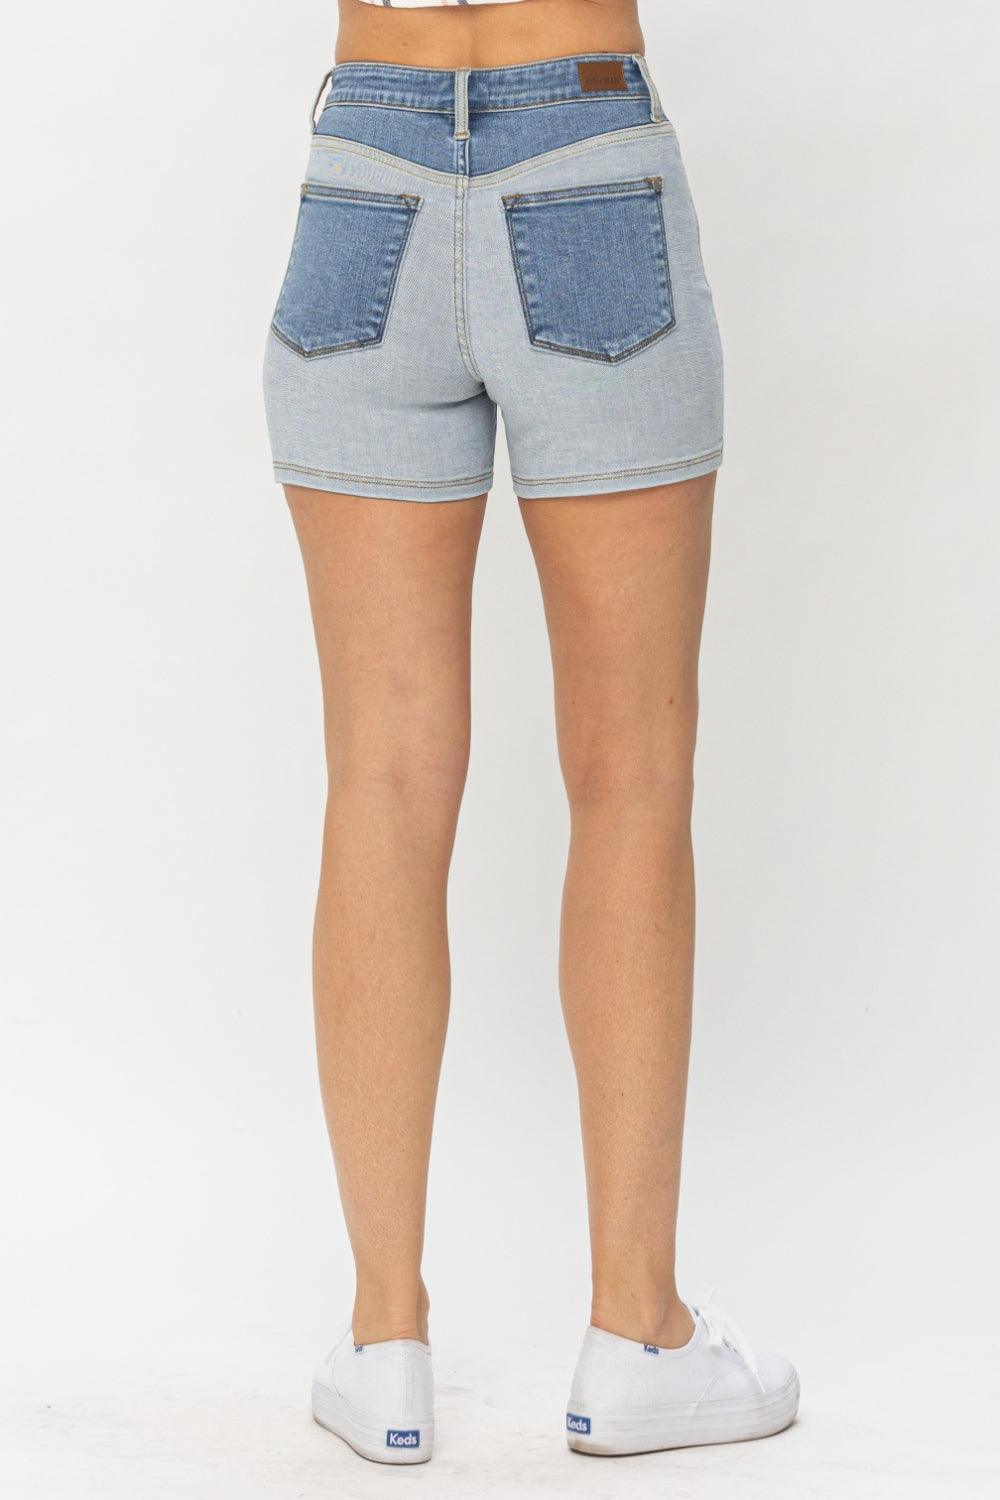 Judy Blue Full Size Color Block Denim Shorts - Wildflower Hippies